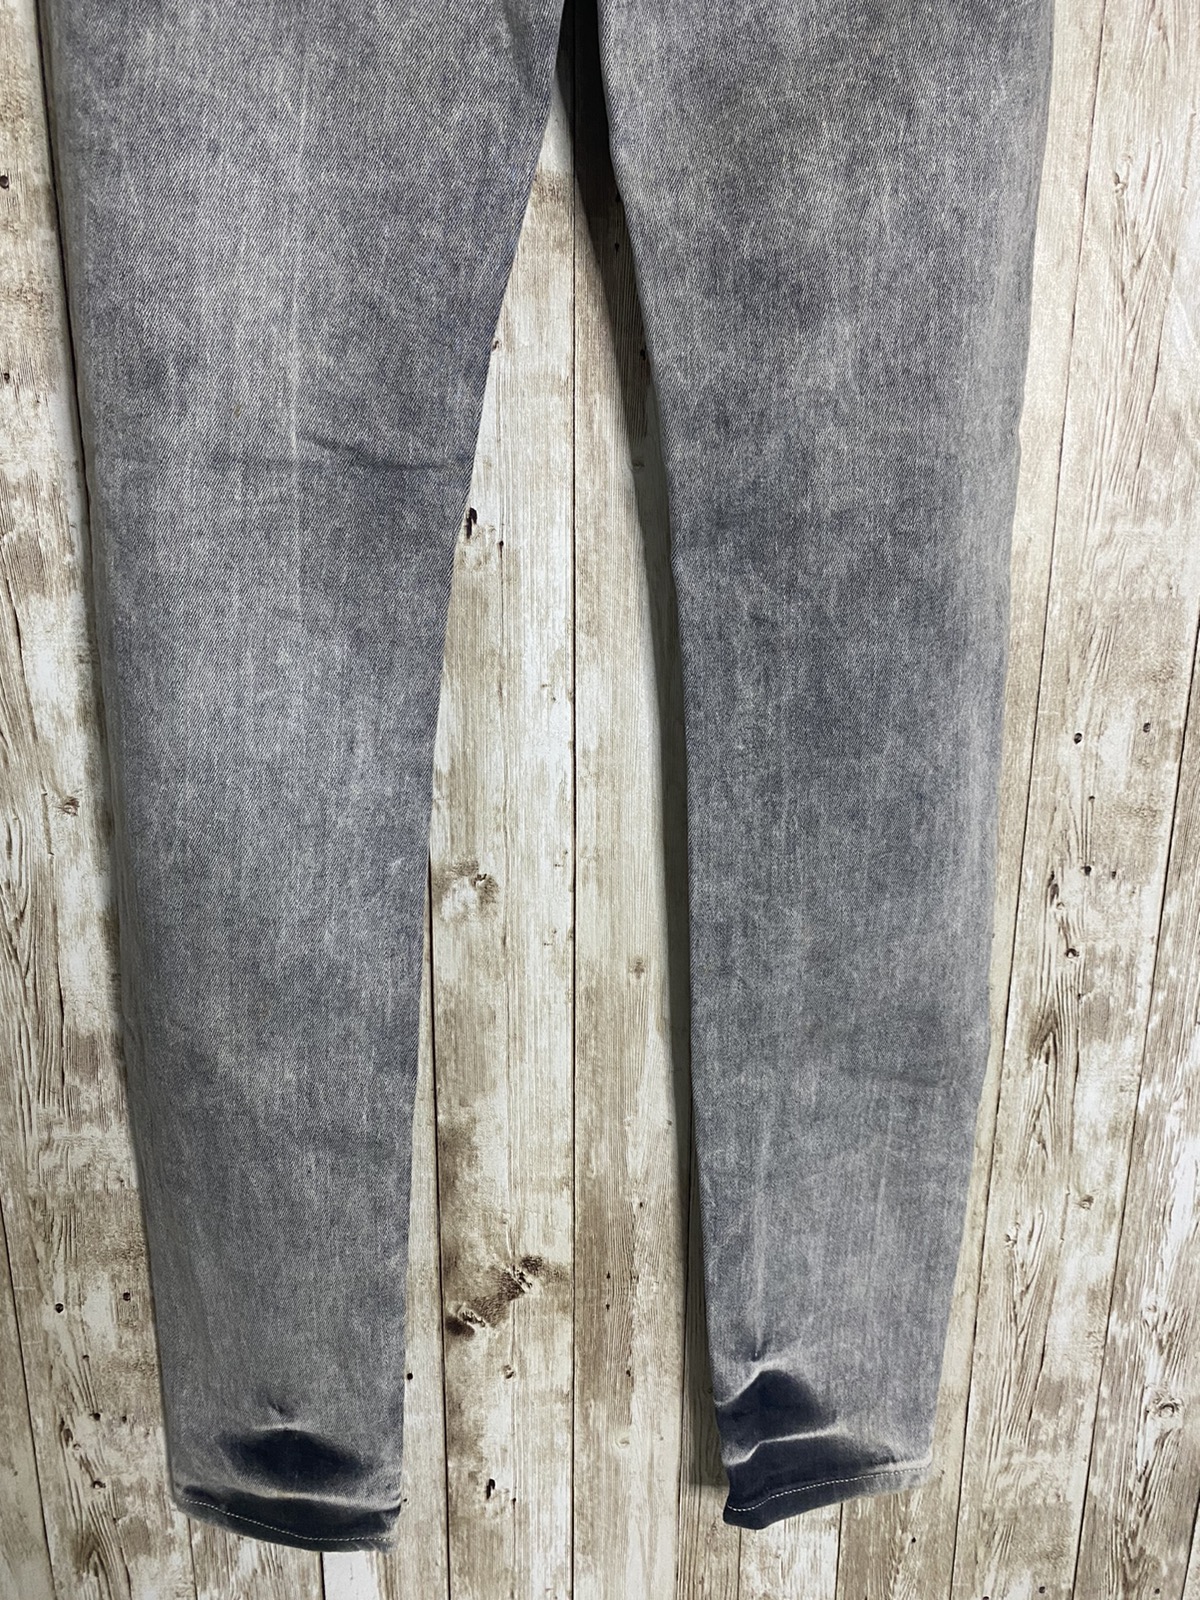 Vivienne Westwood Jeans - 9